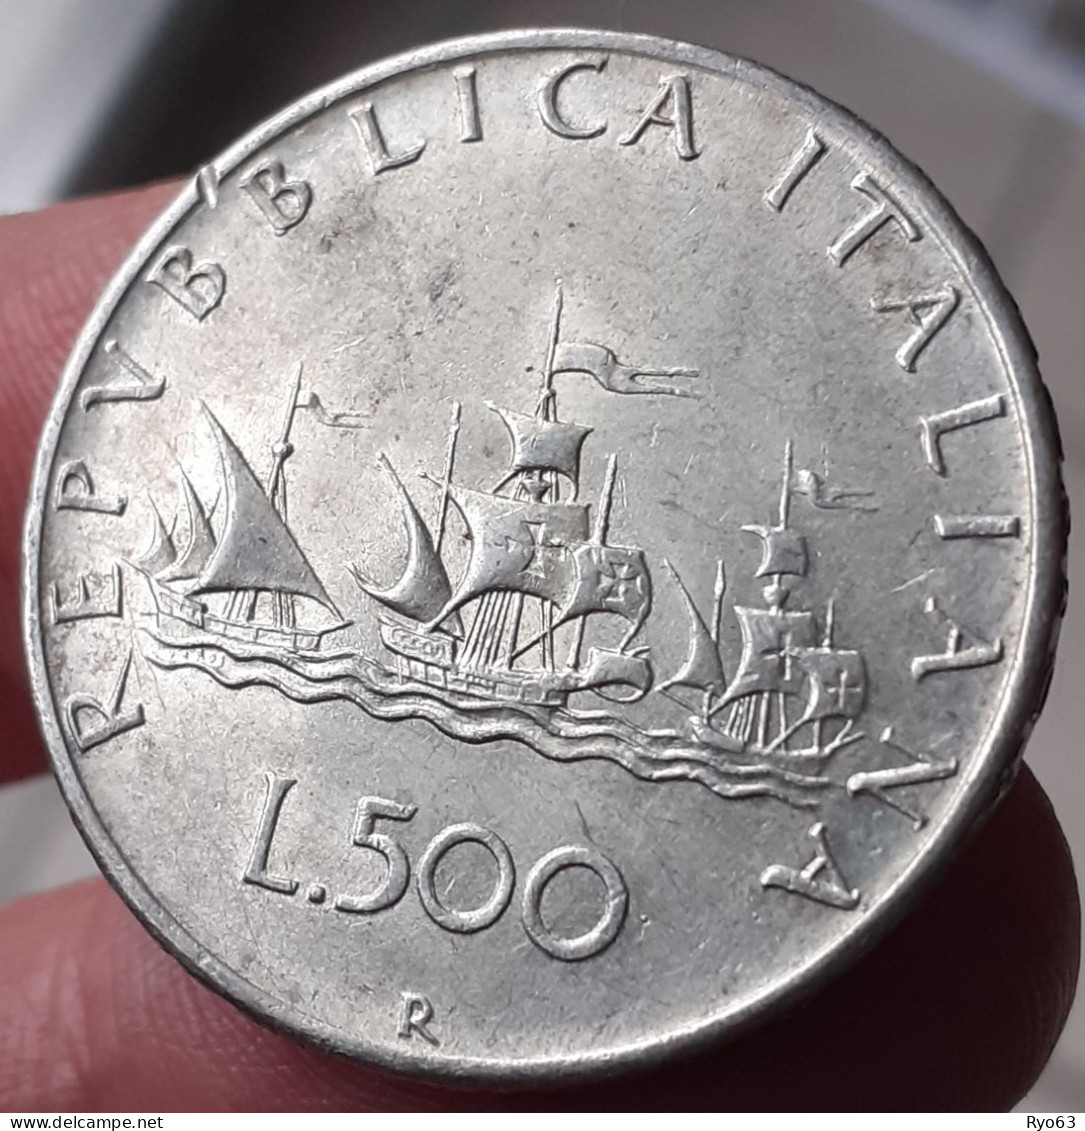 Monnaie 500 Lires 1960 R Italie - 500 Liras